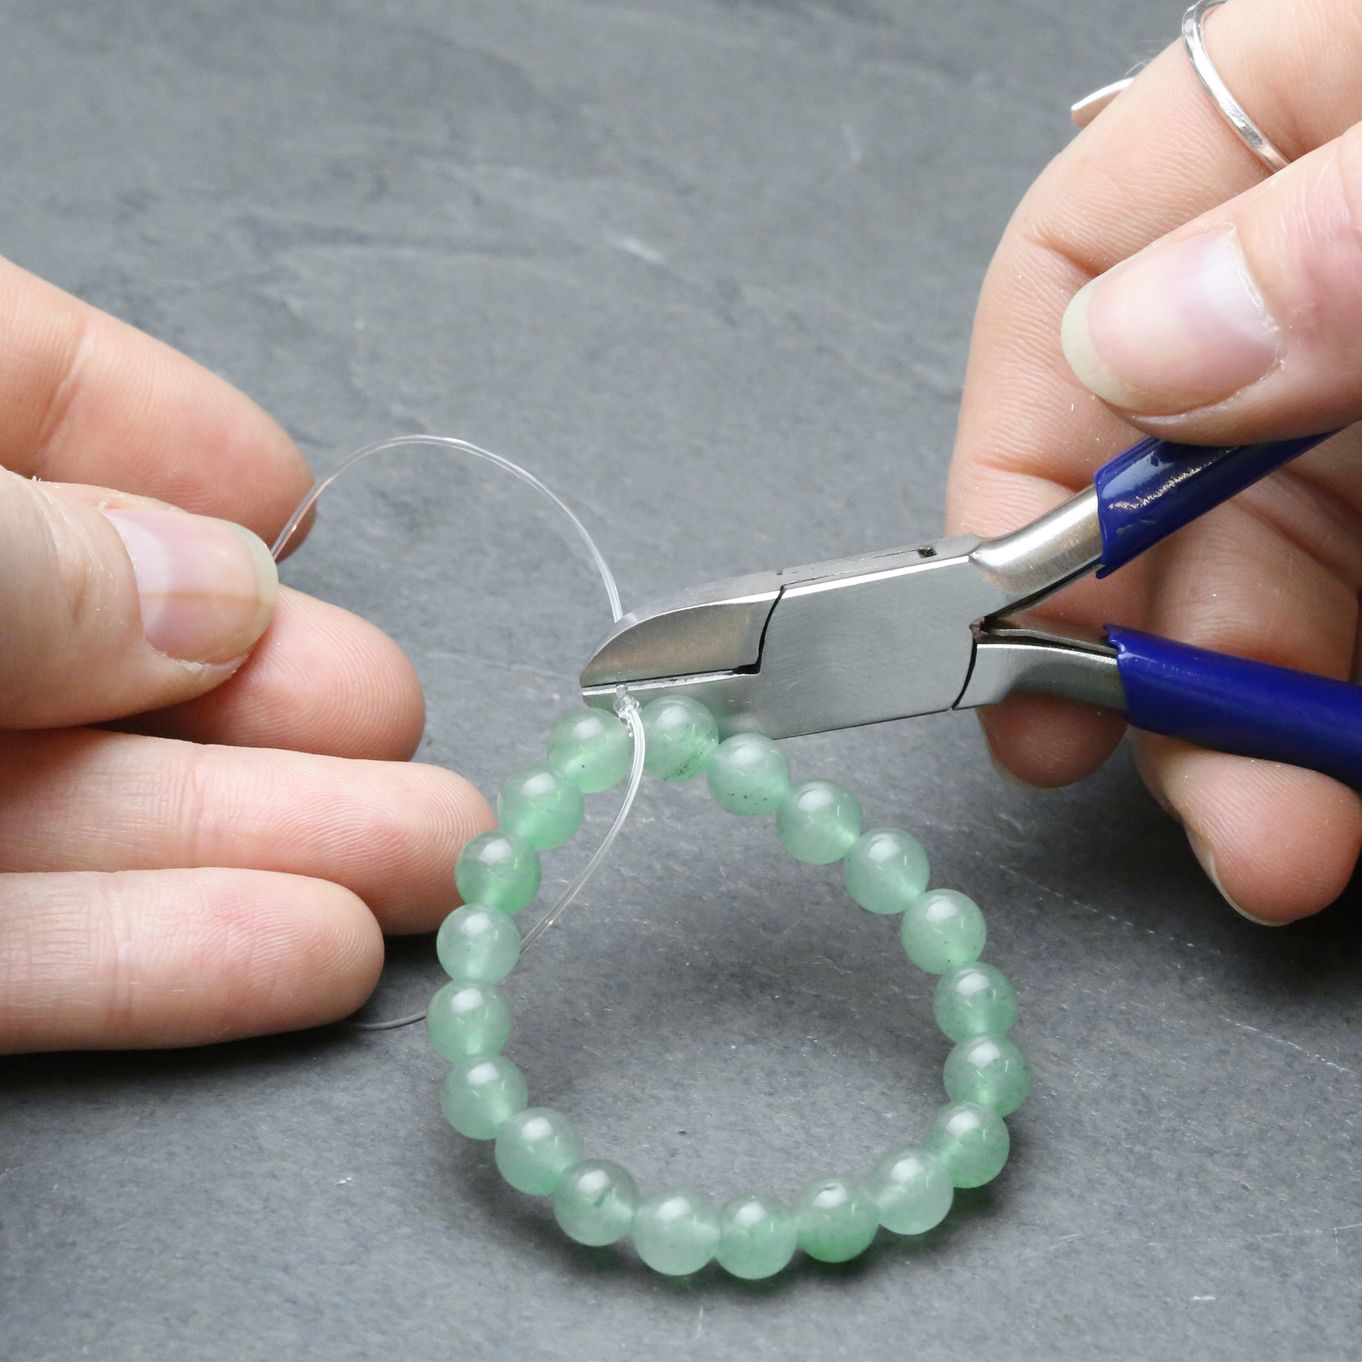 Knotting Stretchy Cord for Bracelets: Surgeon's Knot - BeadFX